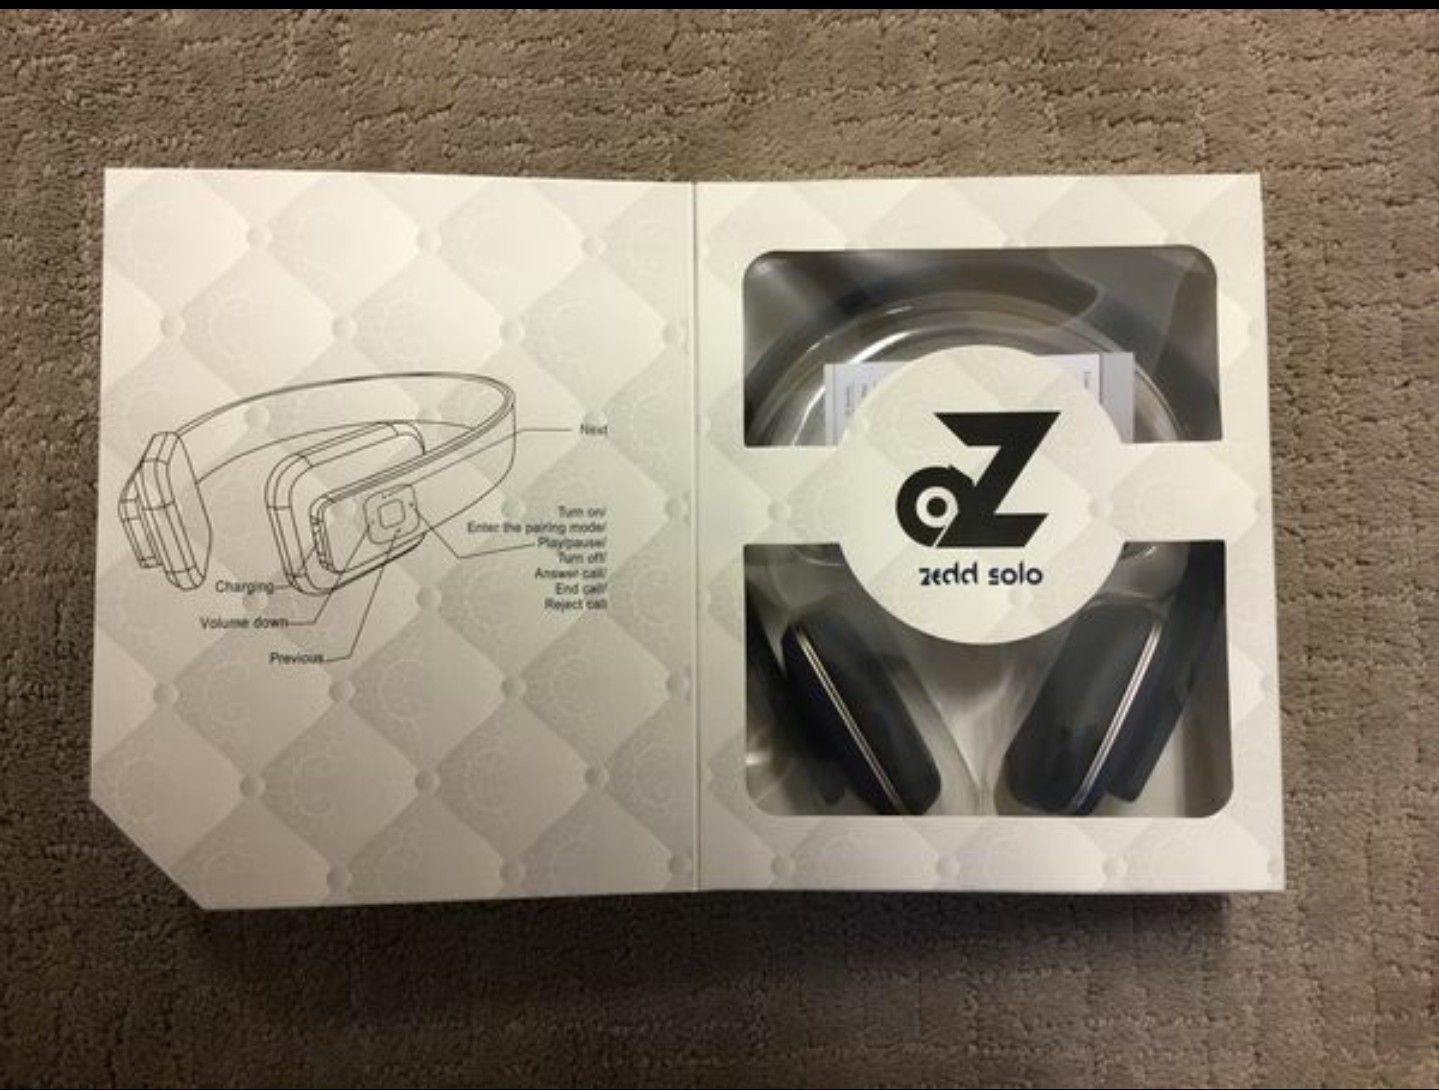 Zedd Solo Wireless Bluetooth Headphones-Dark navy